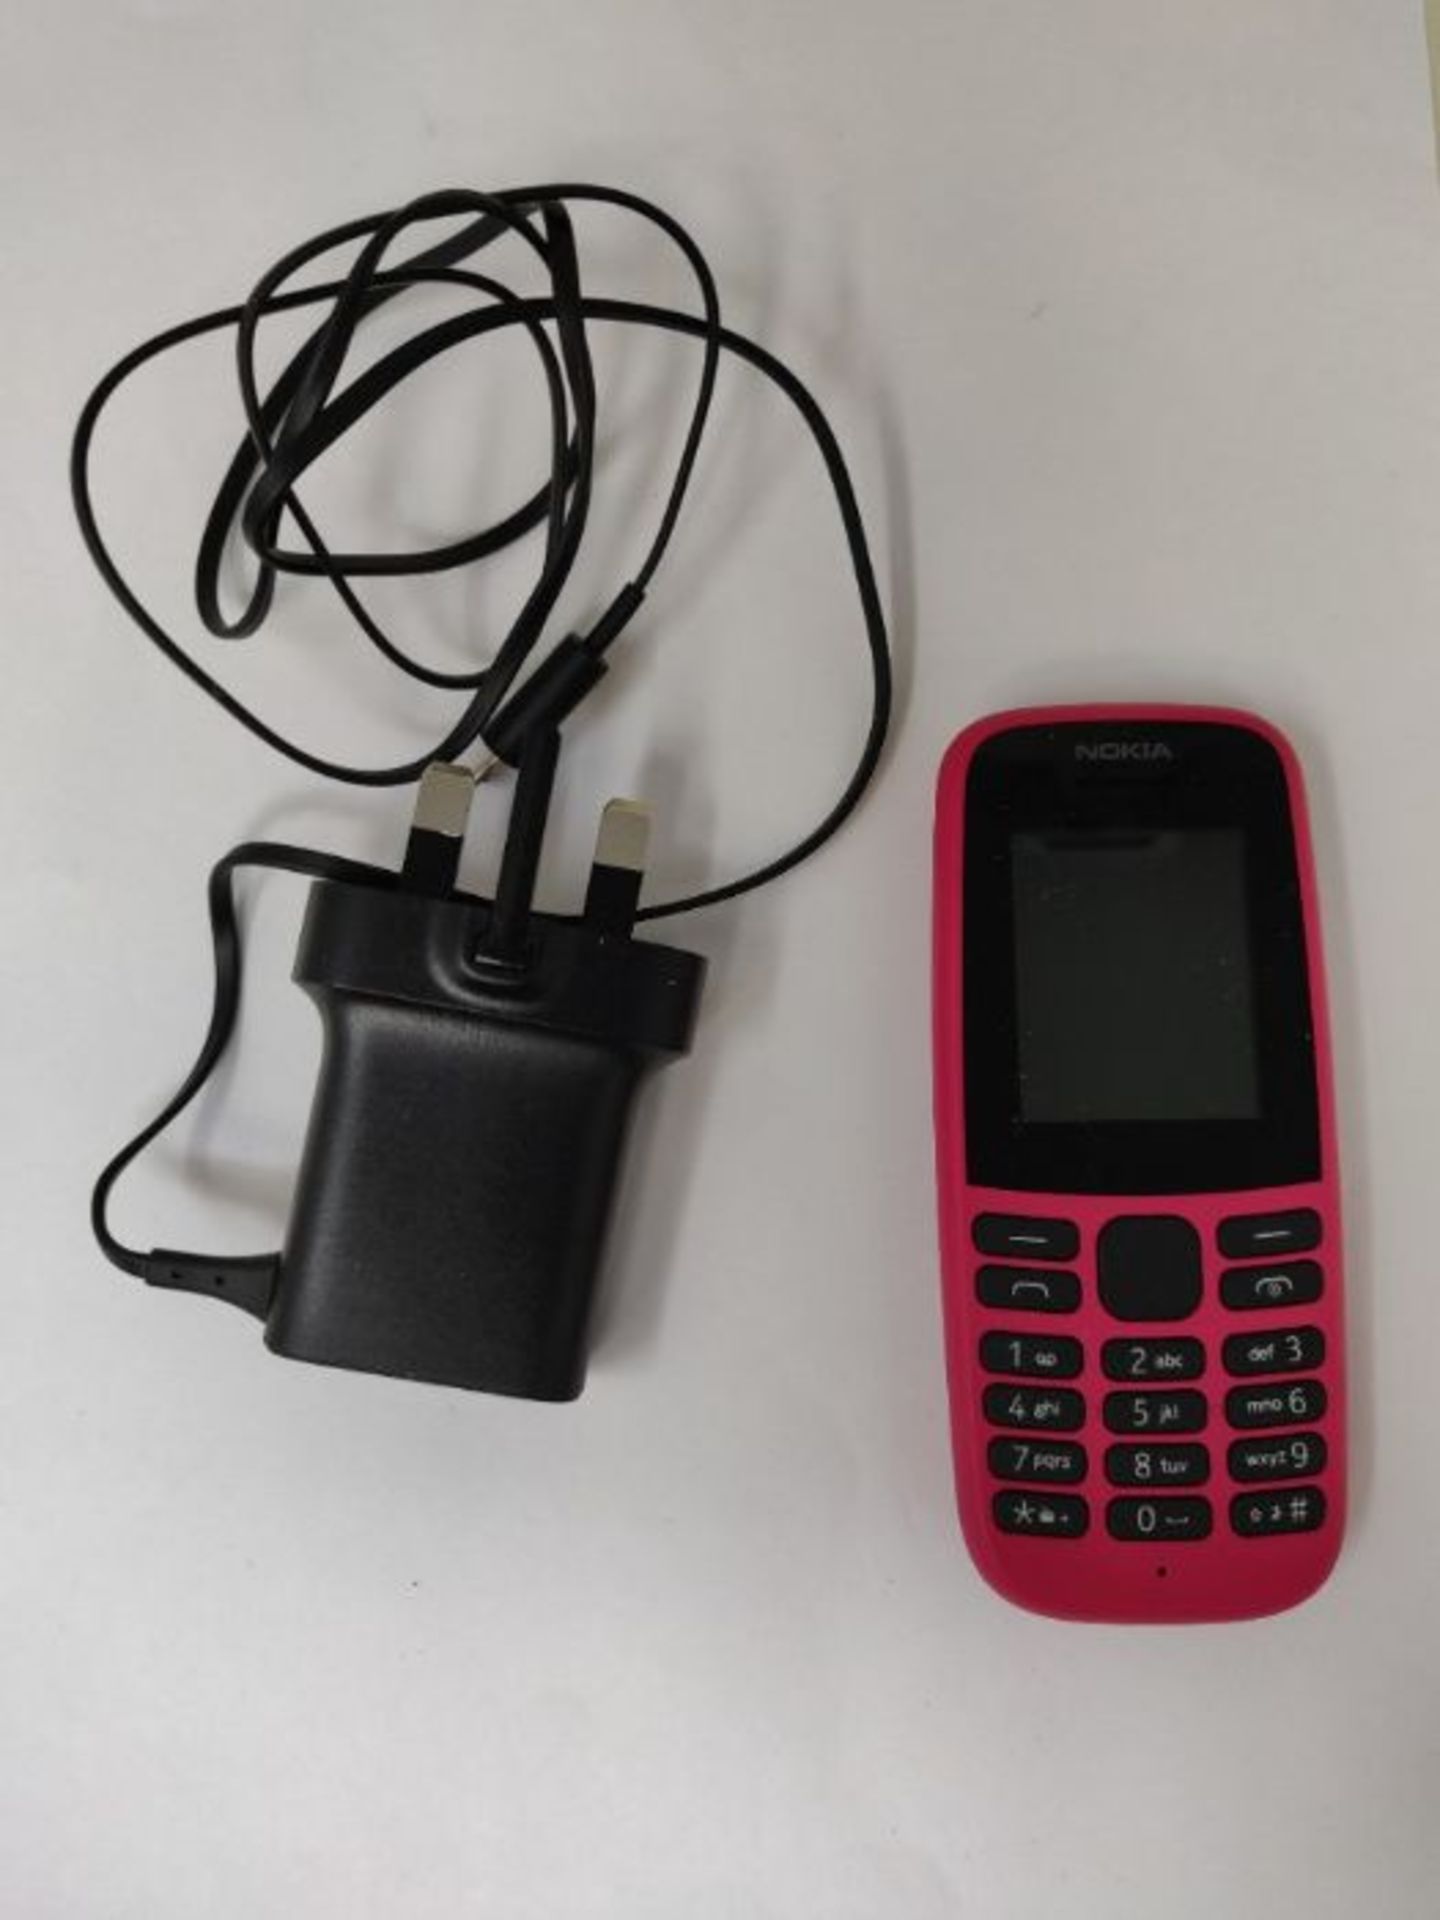 Nokia 105 (2019 edition) 1.77 Inch UK SIM Free Feature Phone (Single SIM)  Pink - Image 3 of 3